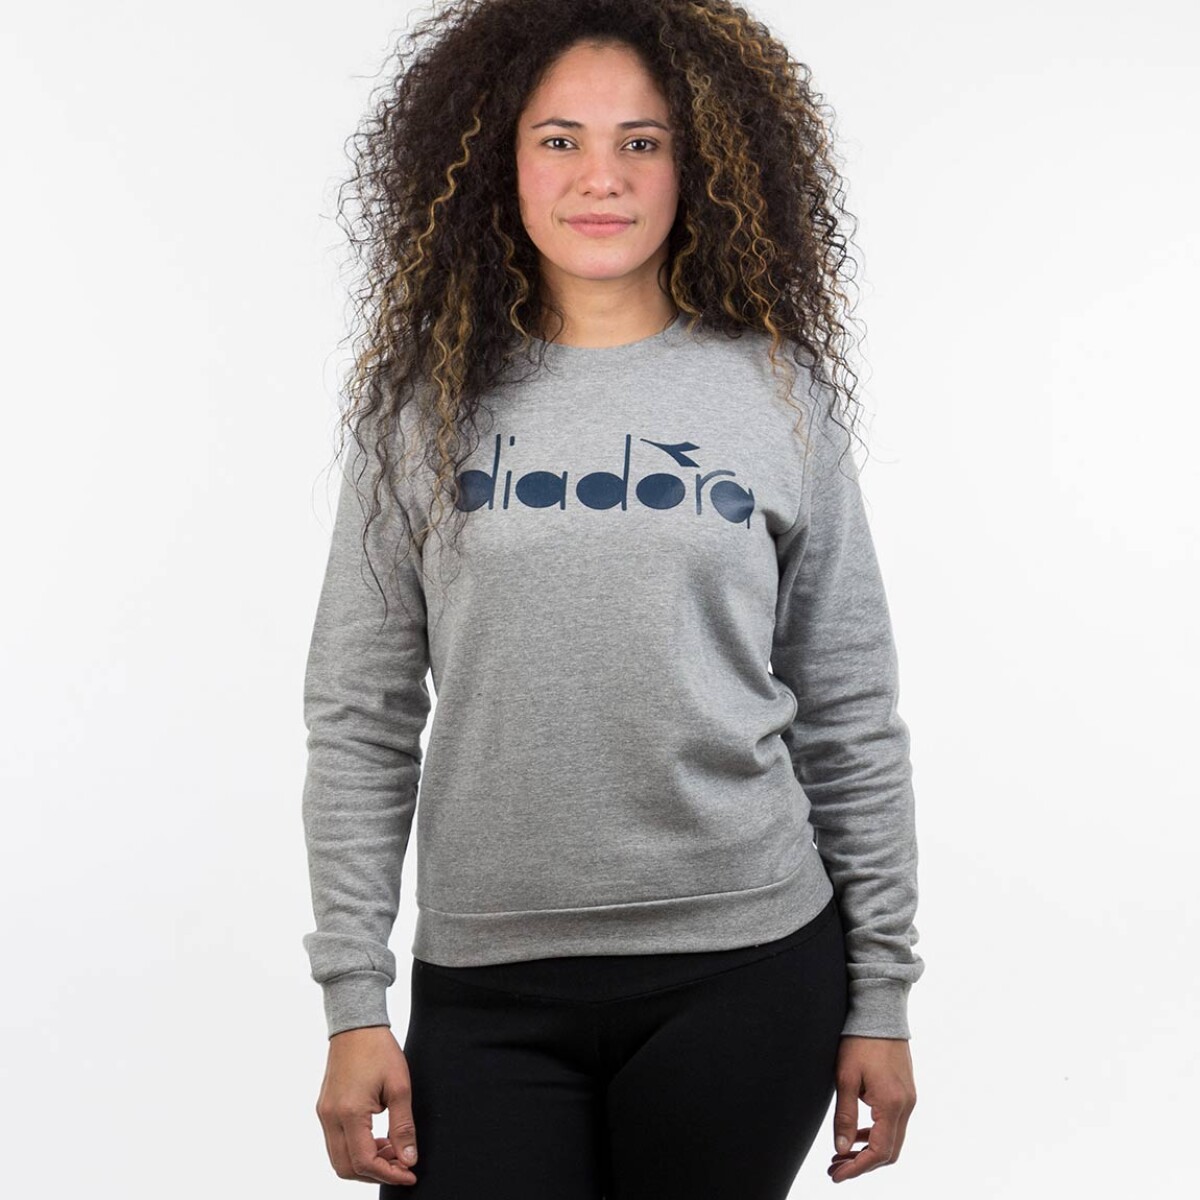 Diadora Buzo Ladies Crew Neck Sweater With Print Grey - Gris 